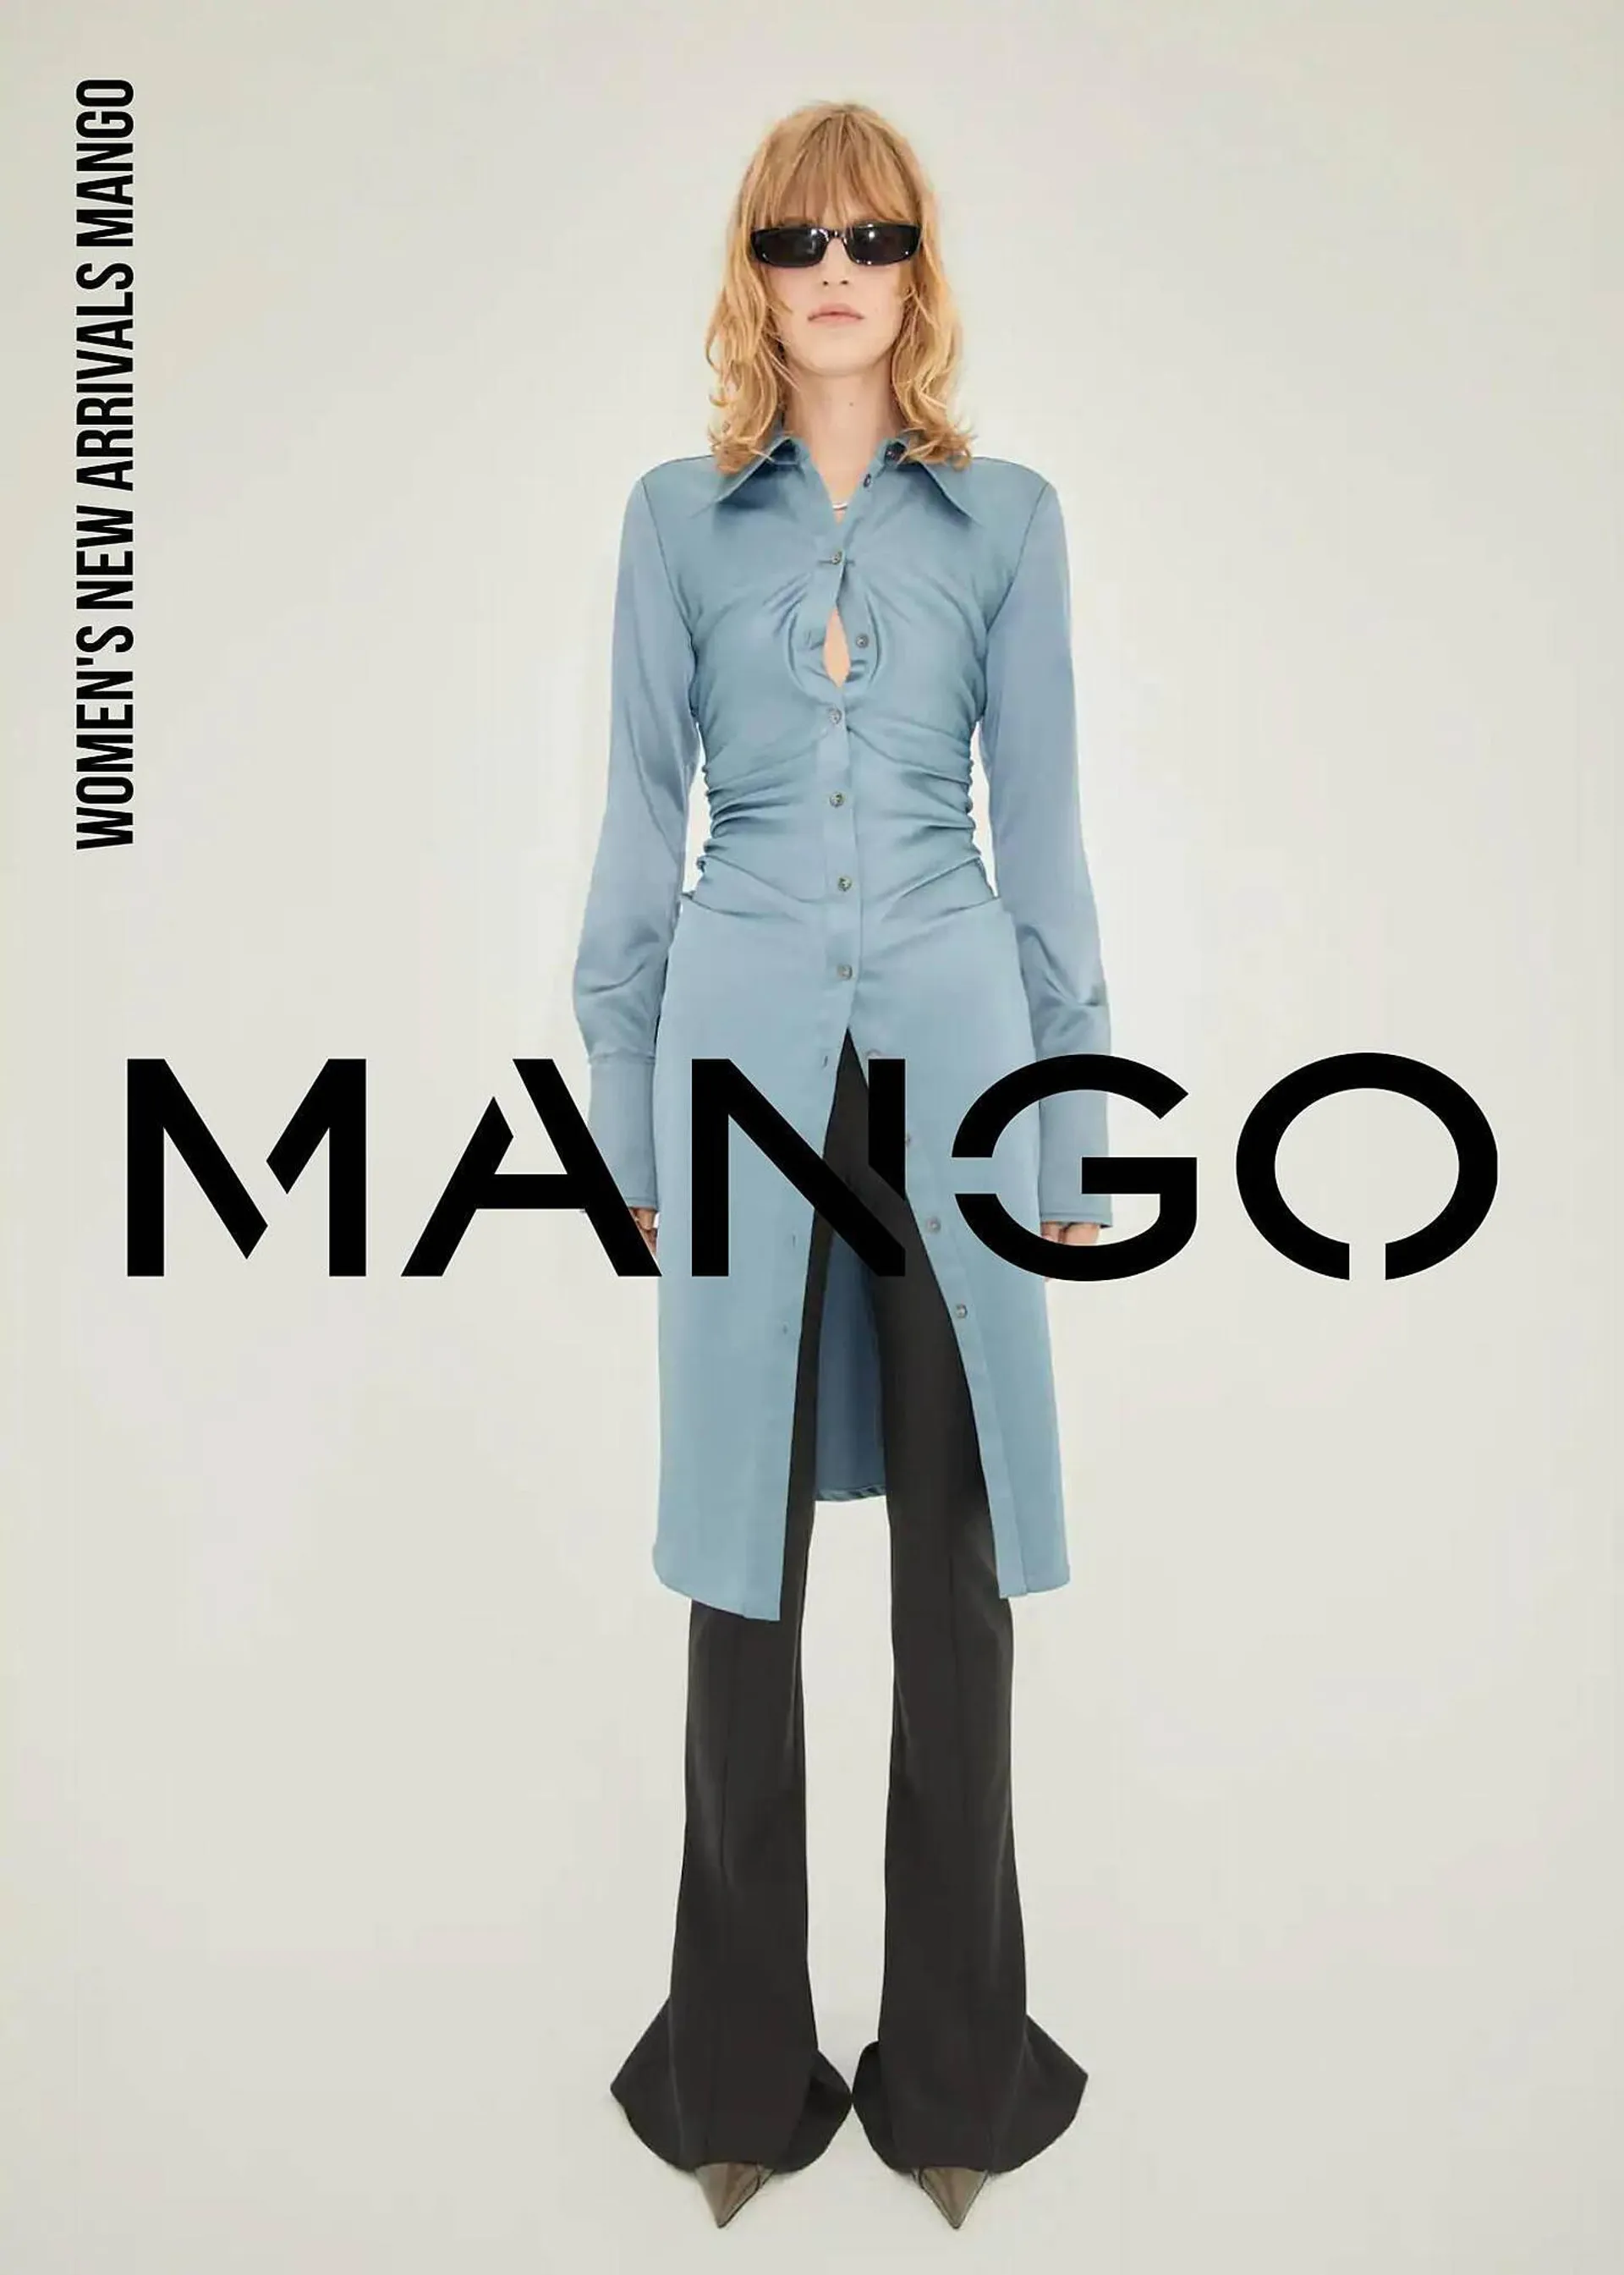 Mango catalogue